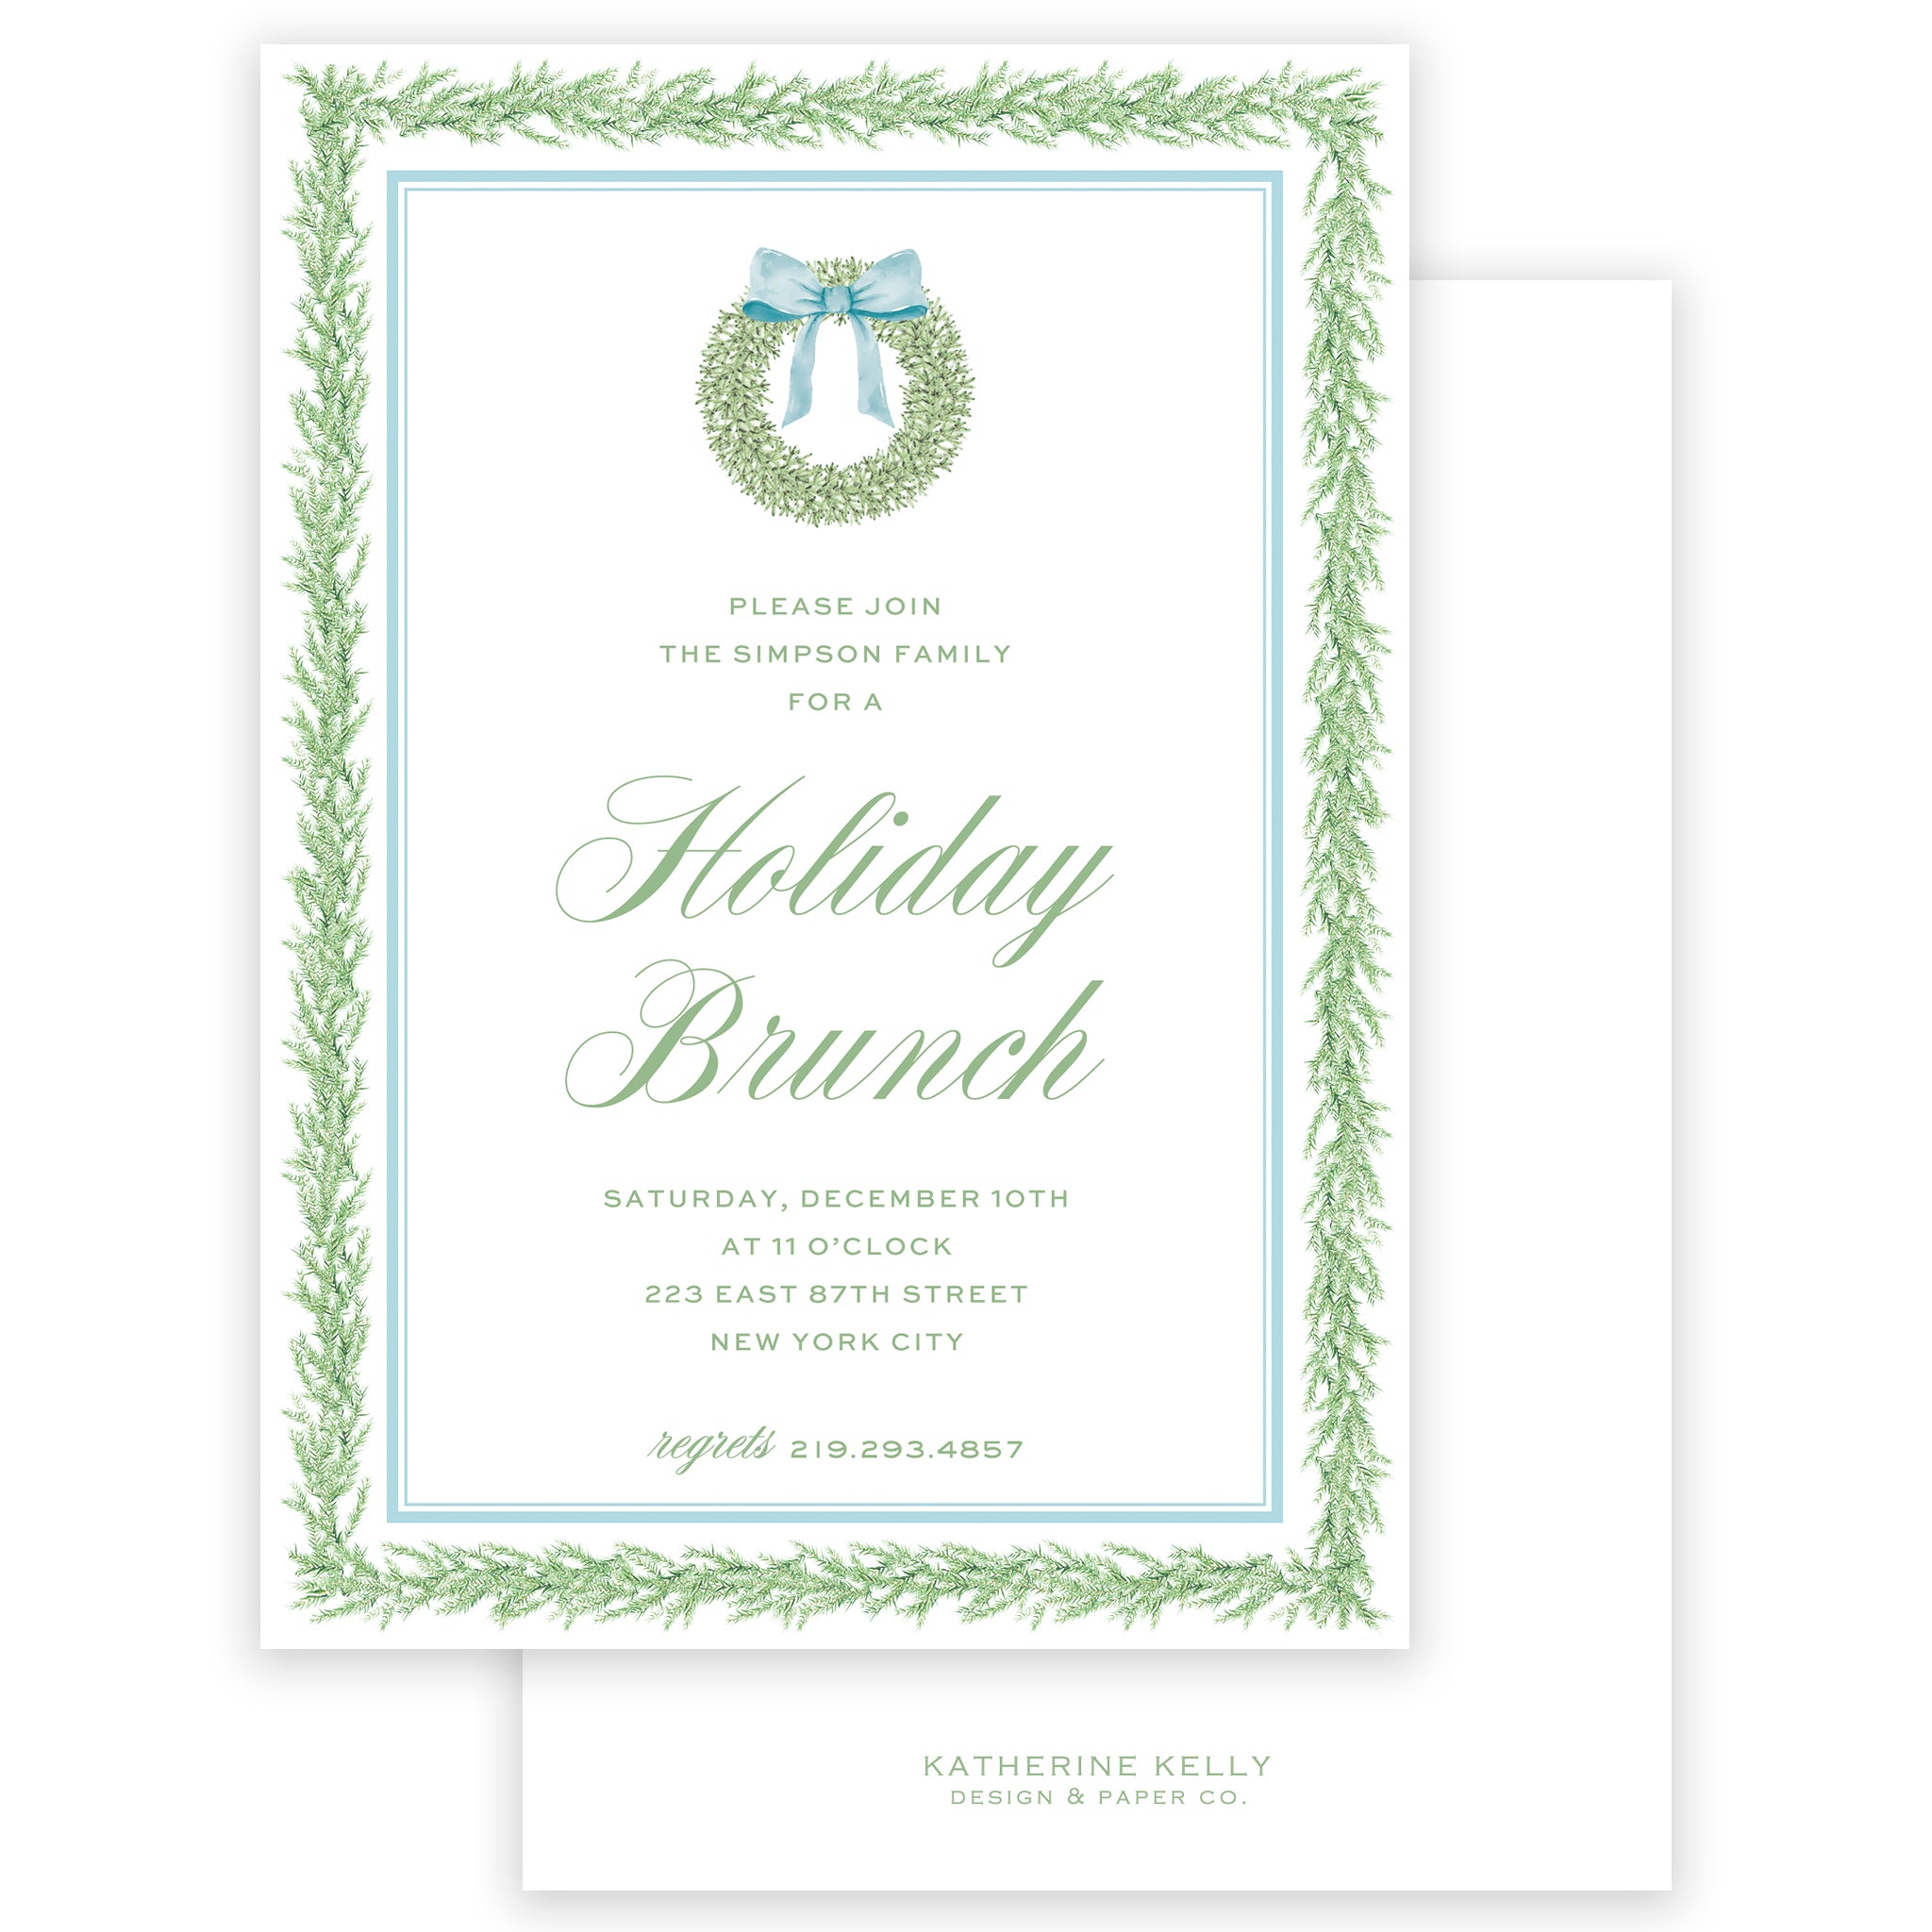 watercolor wreath party invitation